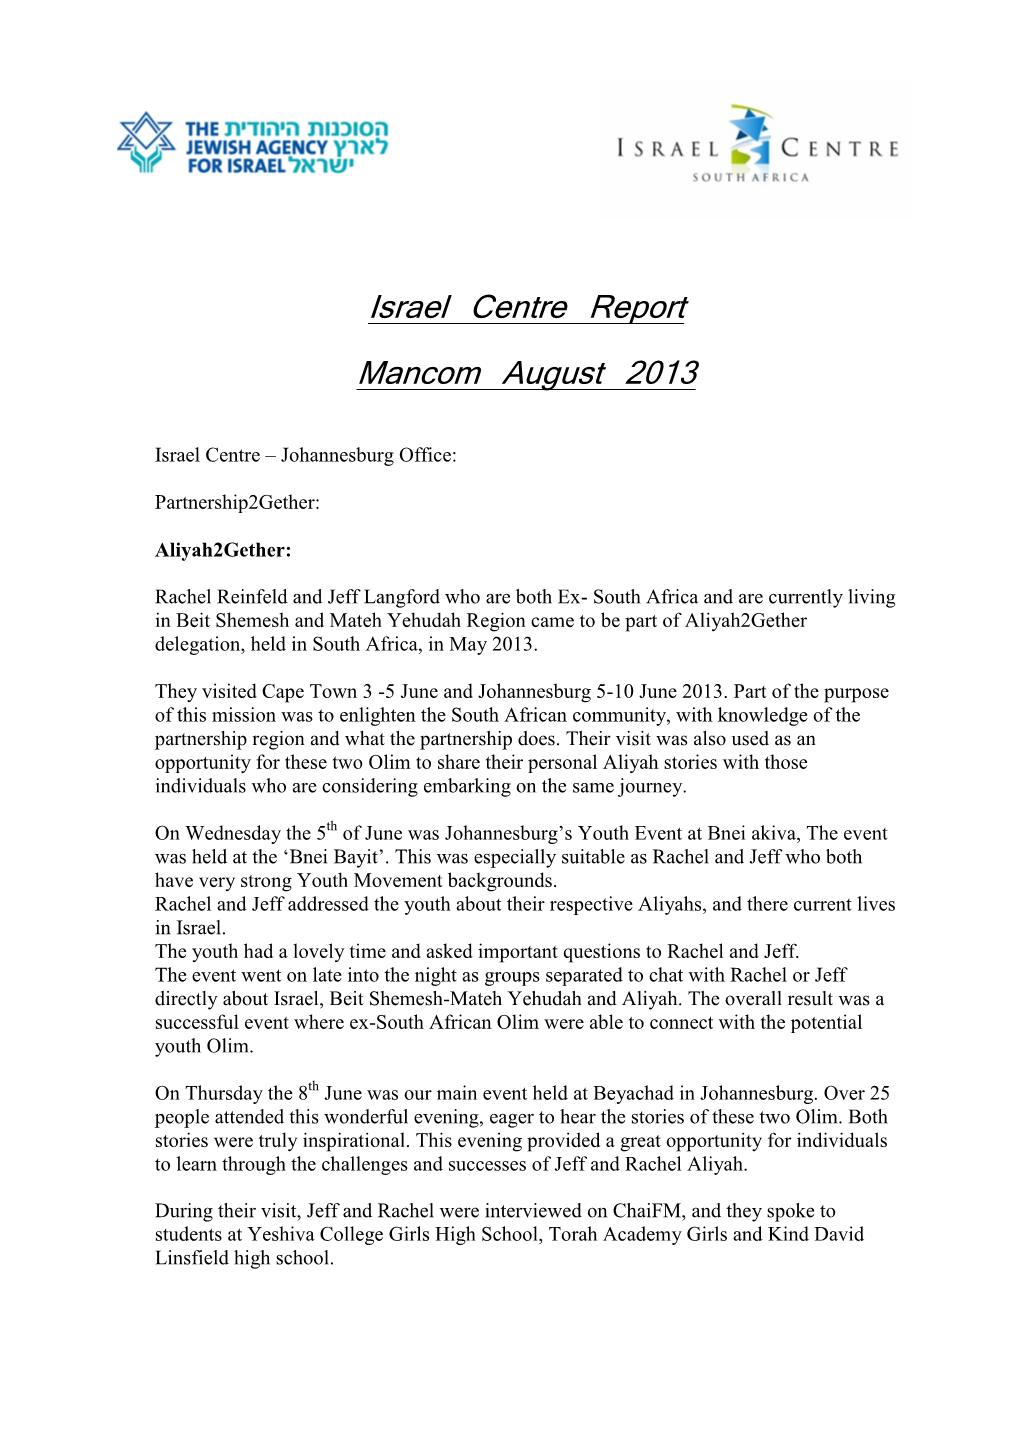 Israel Centre Report Mancom August 2013